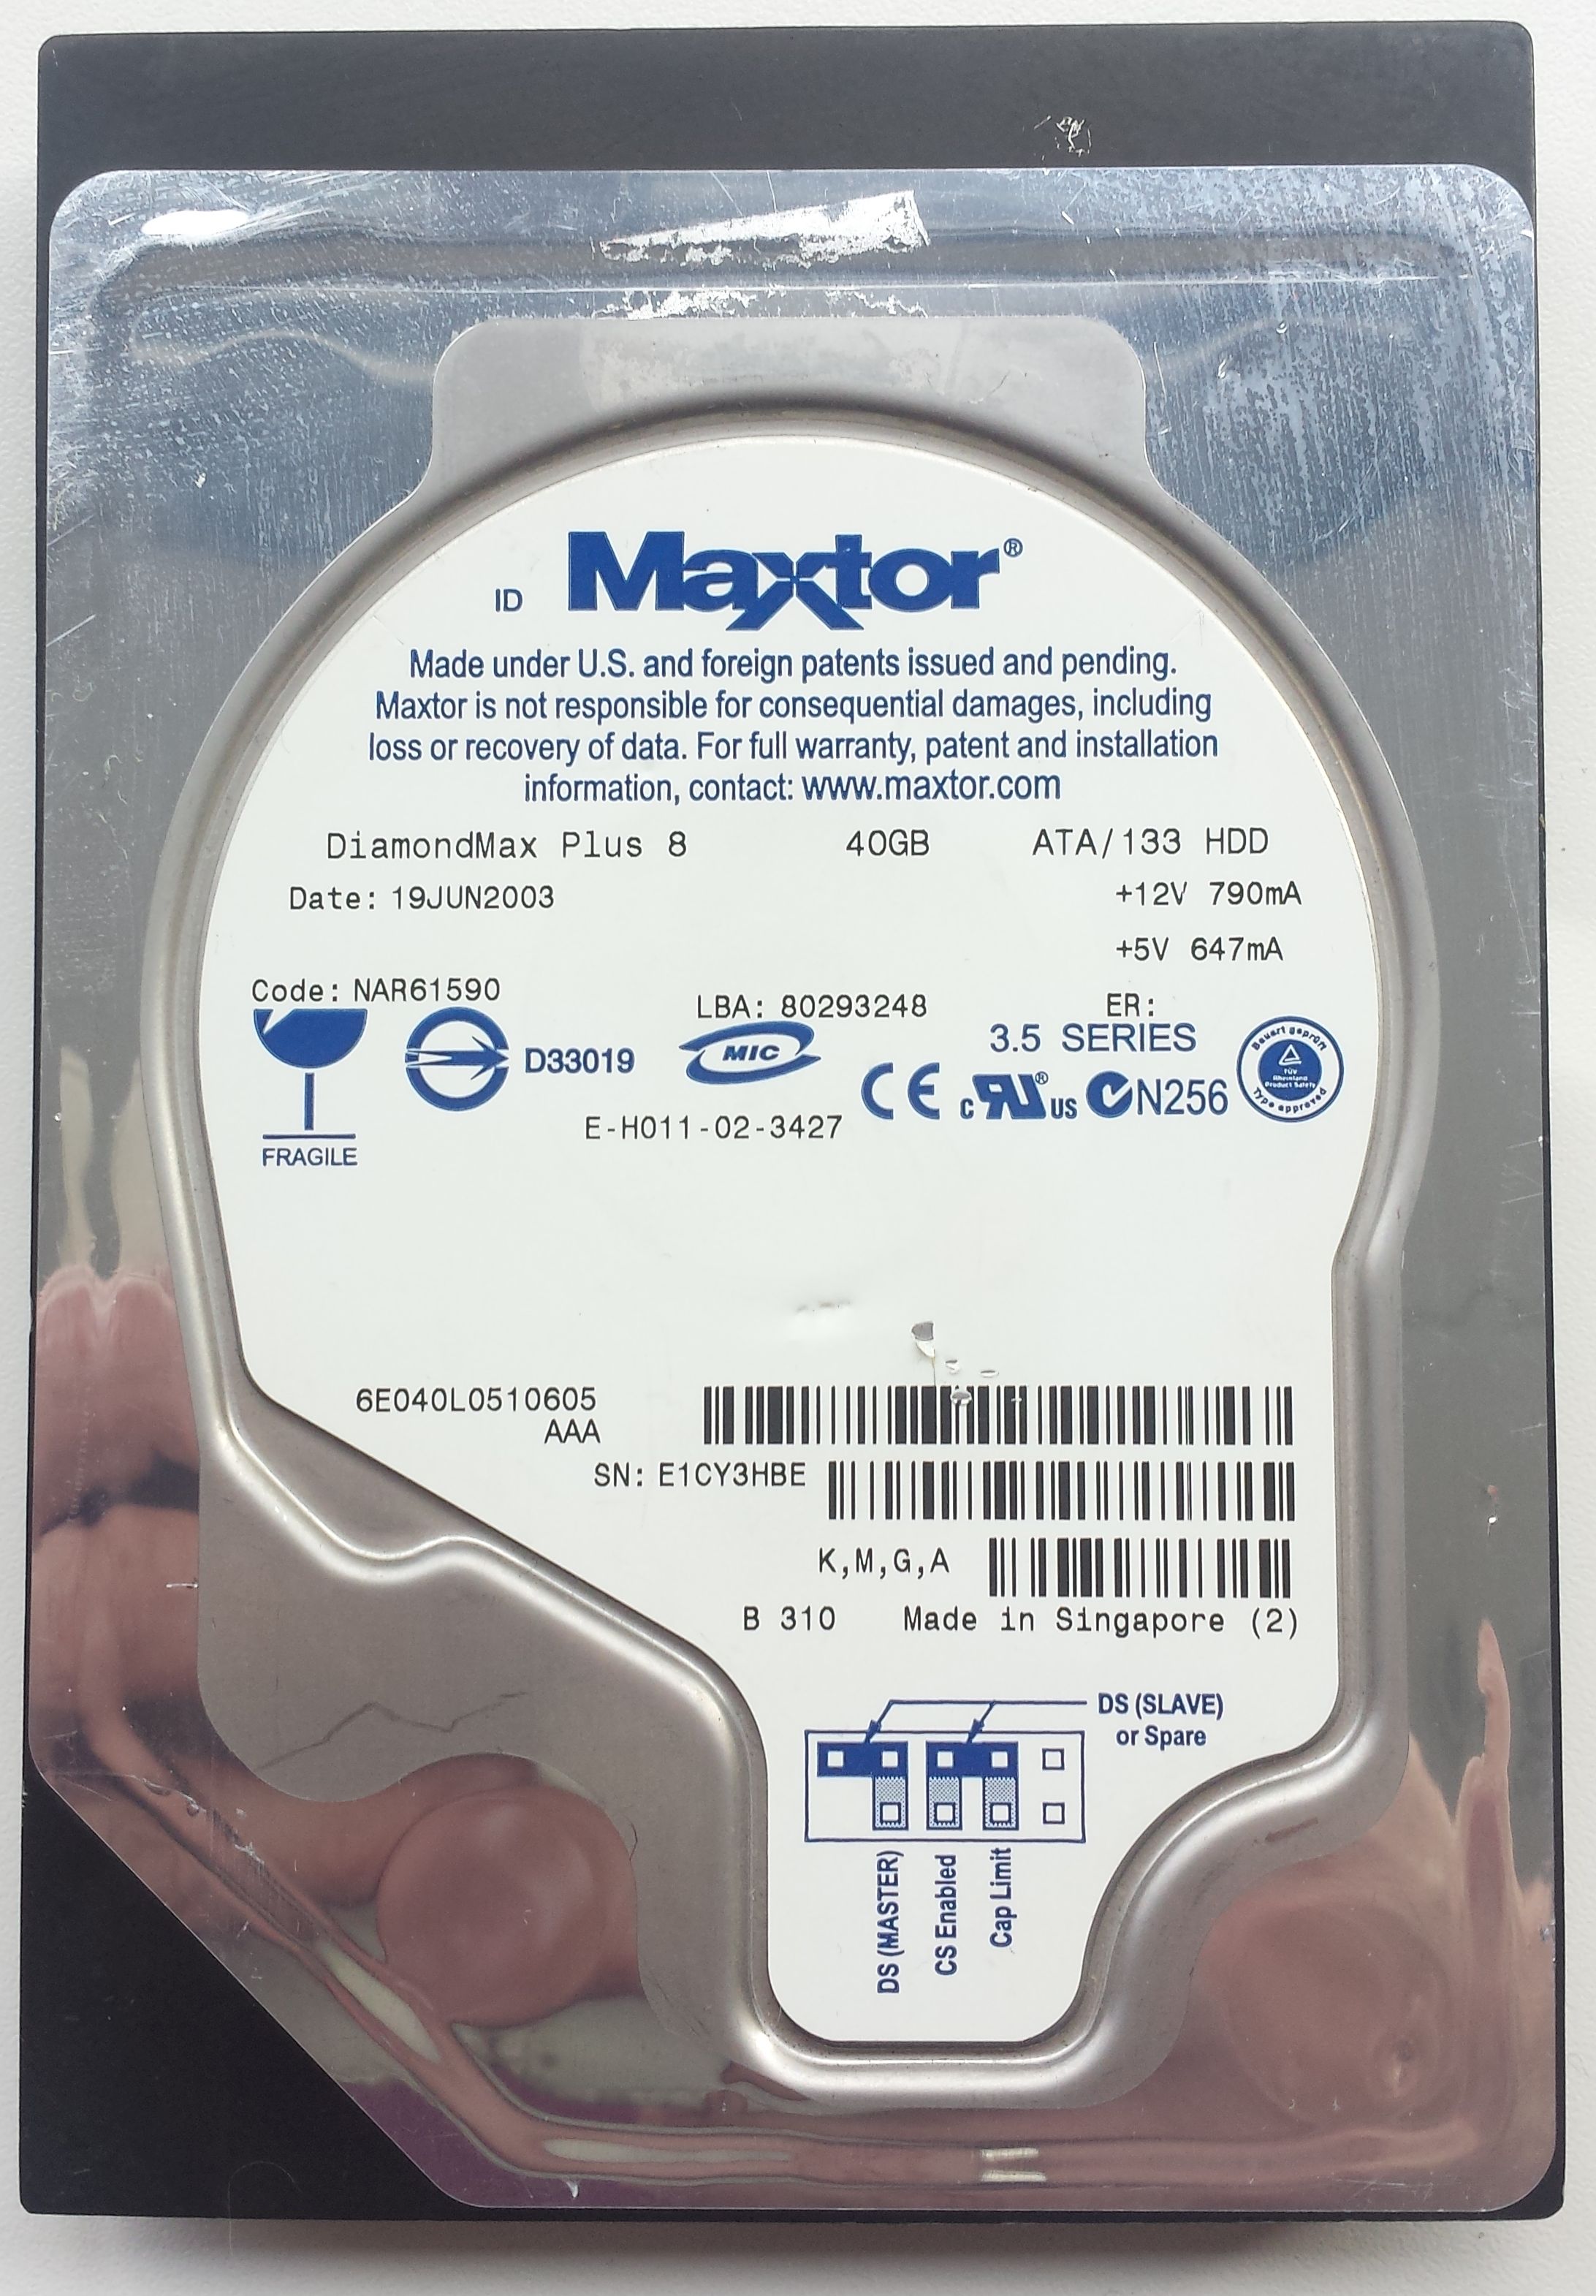 HDD PATA/133 3.5" 40GB / Maxtor DiamondMax Plus 8 (6E040L05)